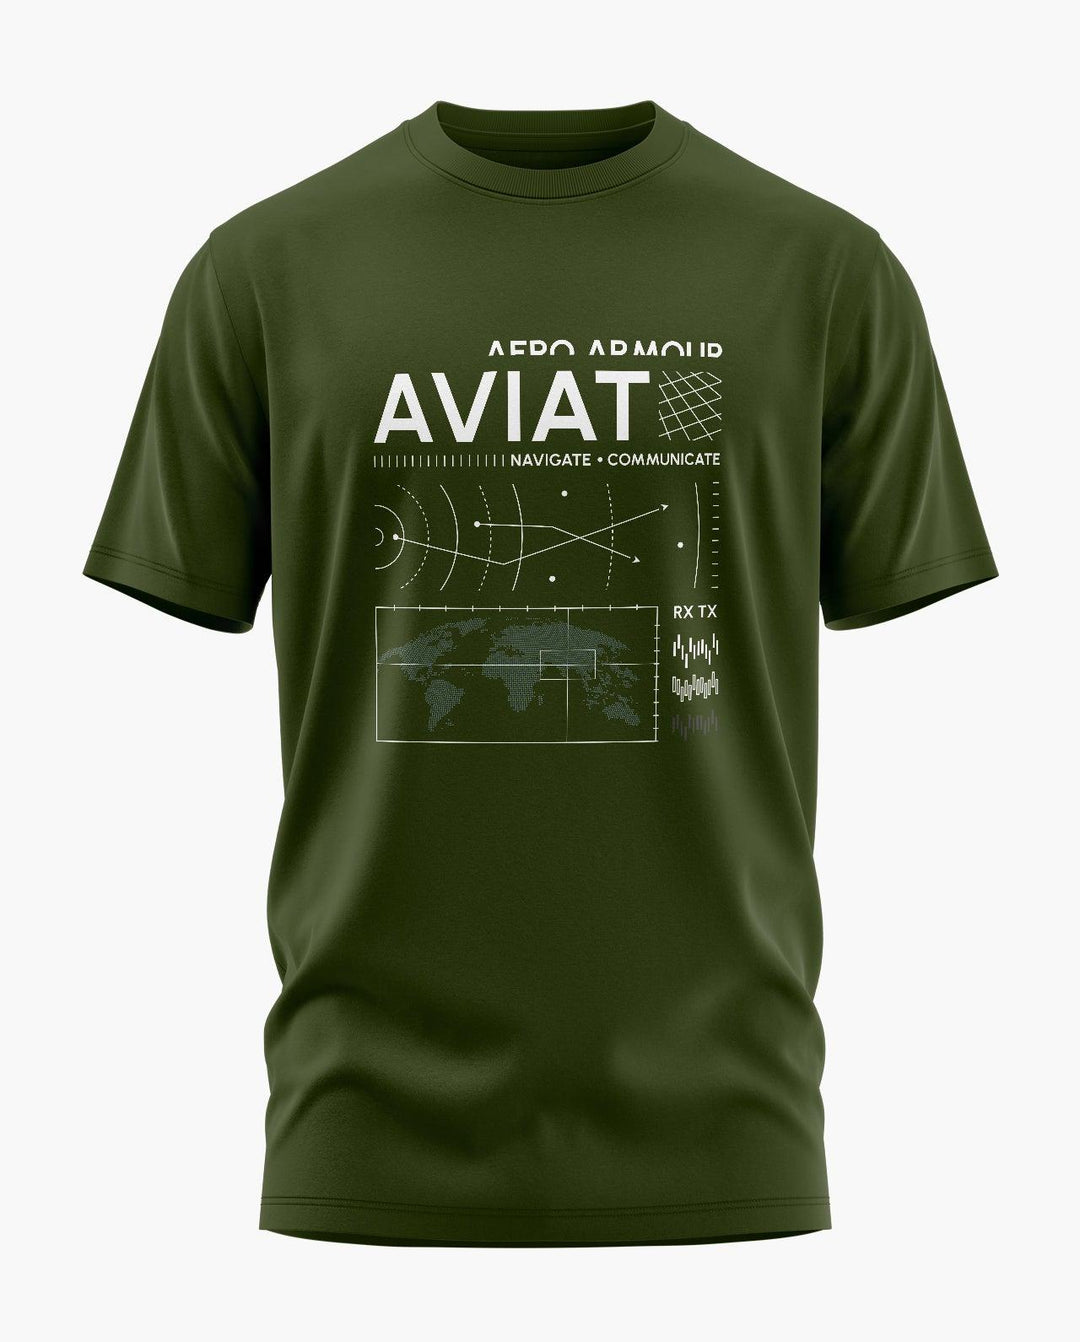 Aviate Navigate Communicate T-Shirt - Aero Armour